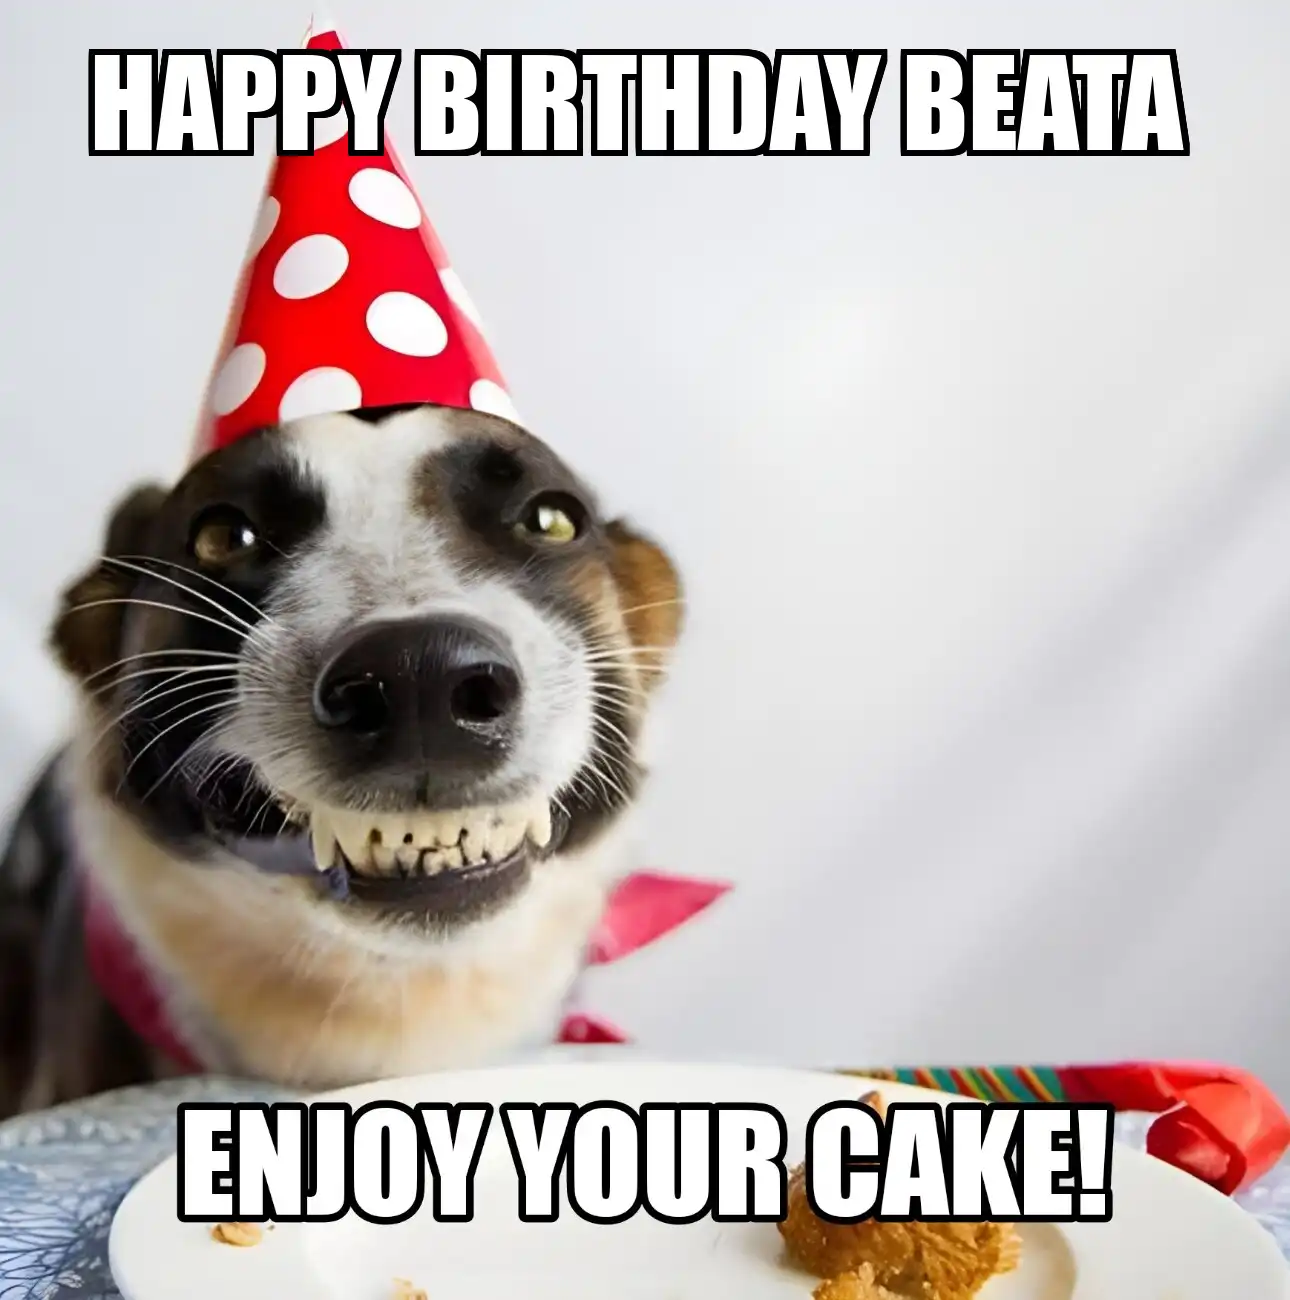 Happy Birthday Beata Enjoy Your Cake Dog Meme